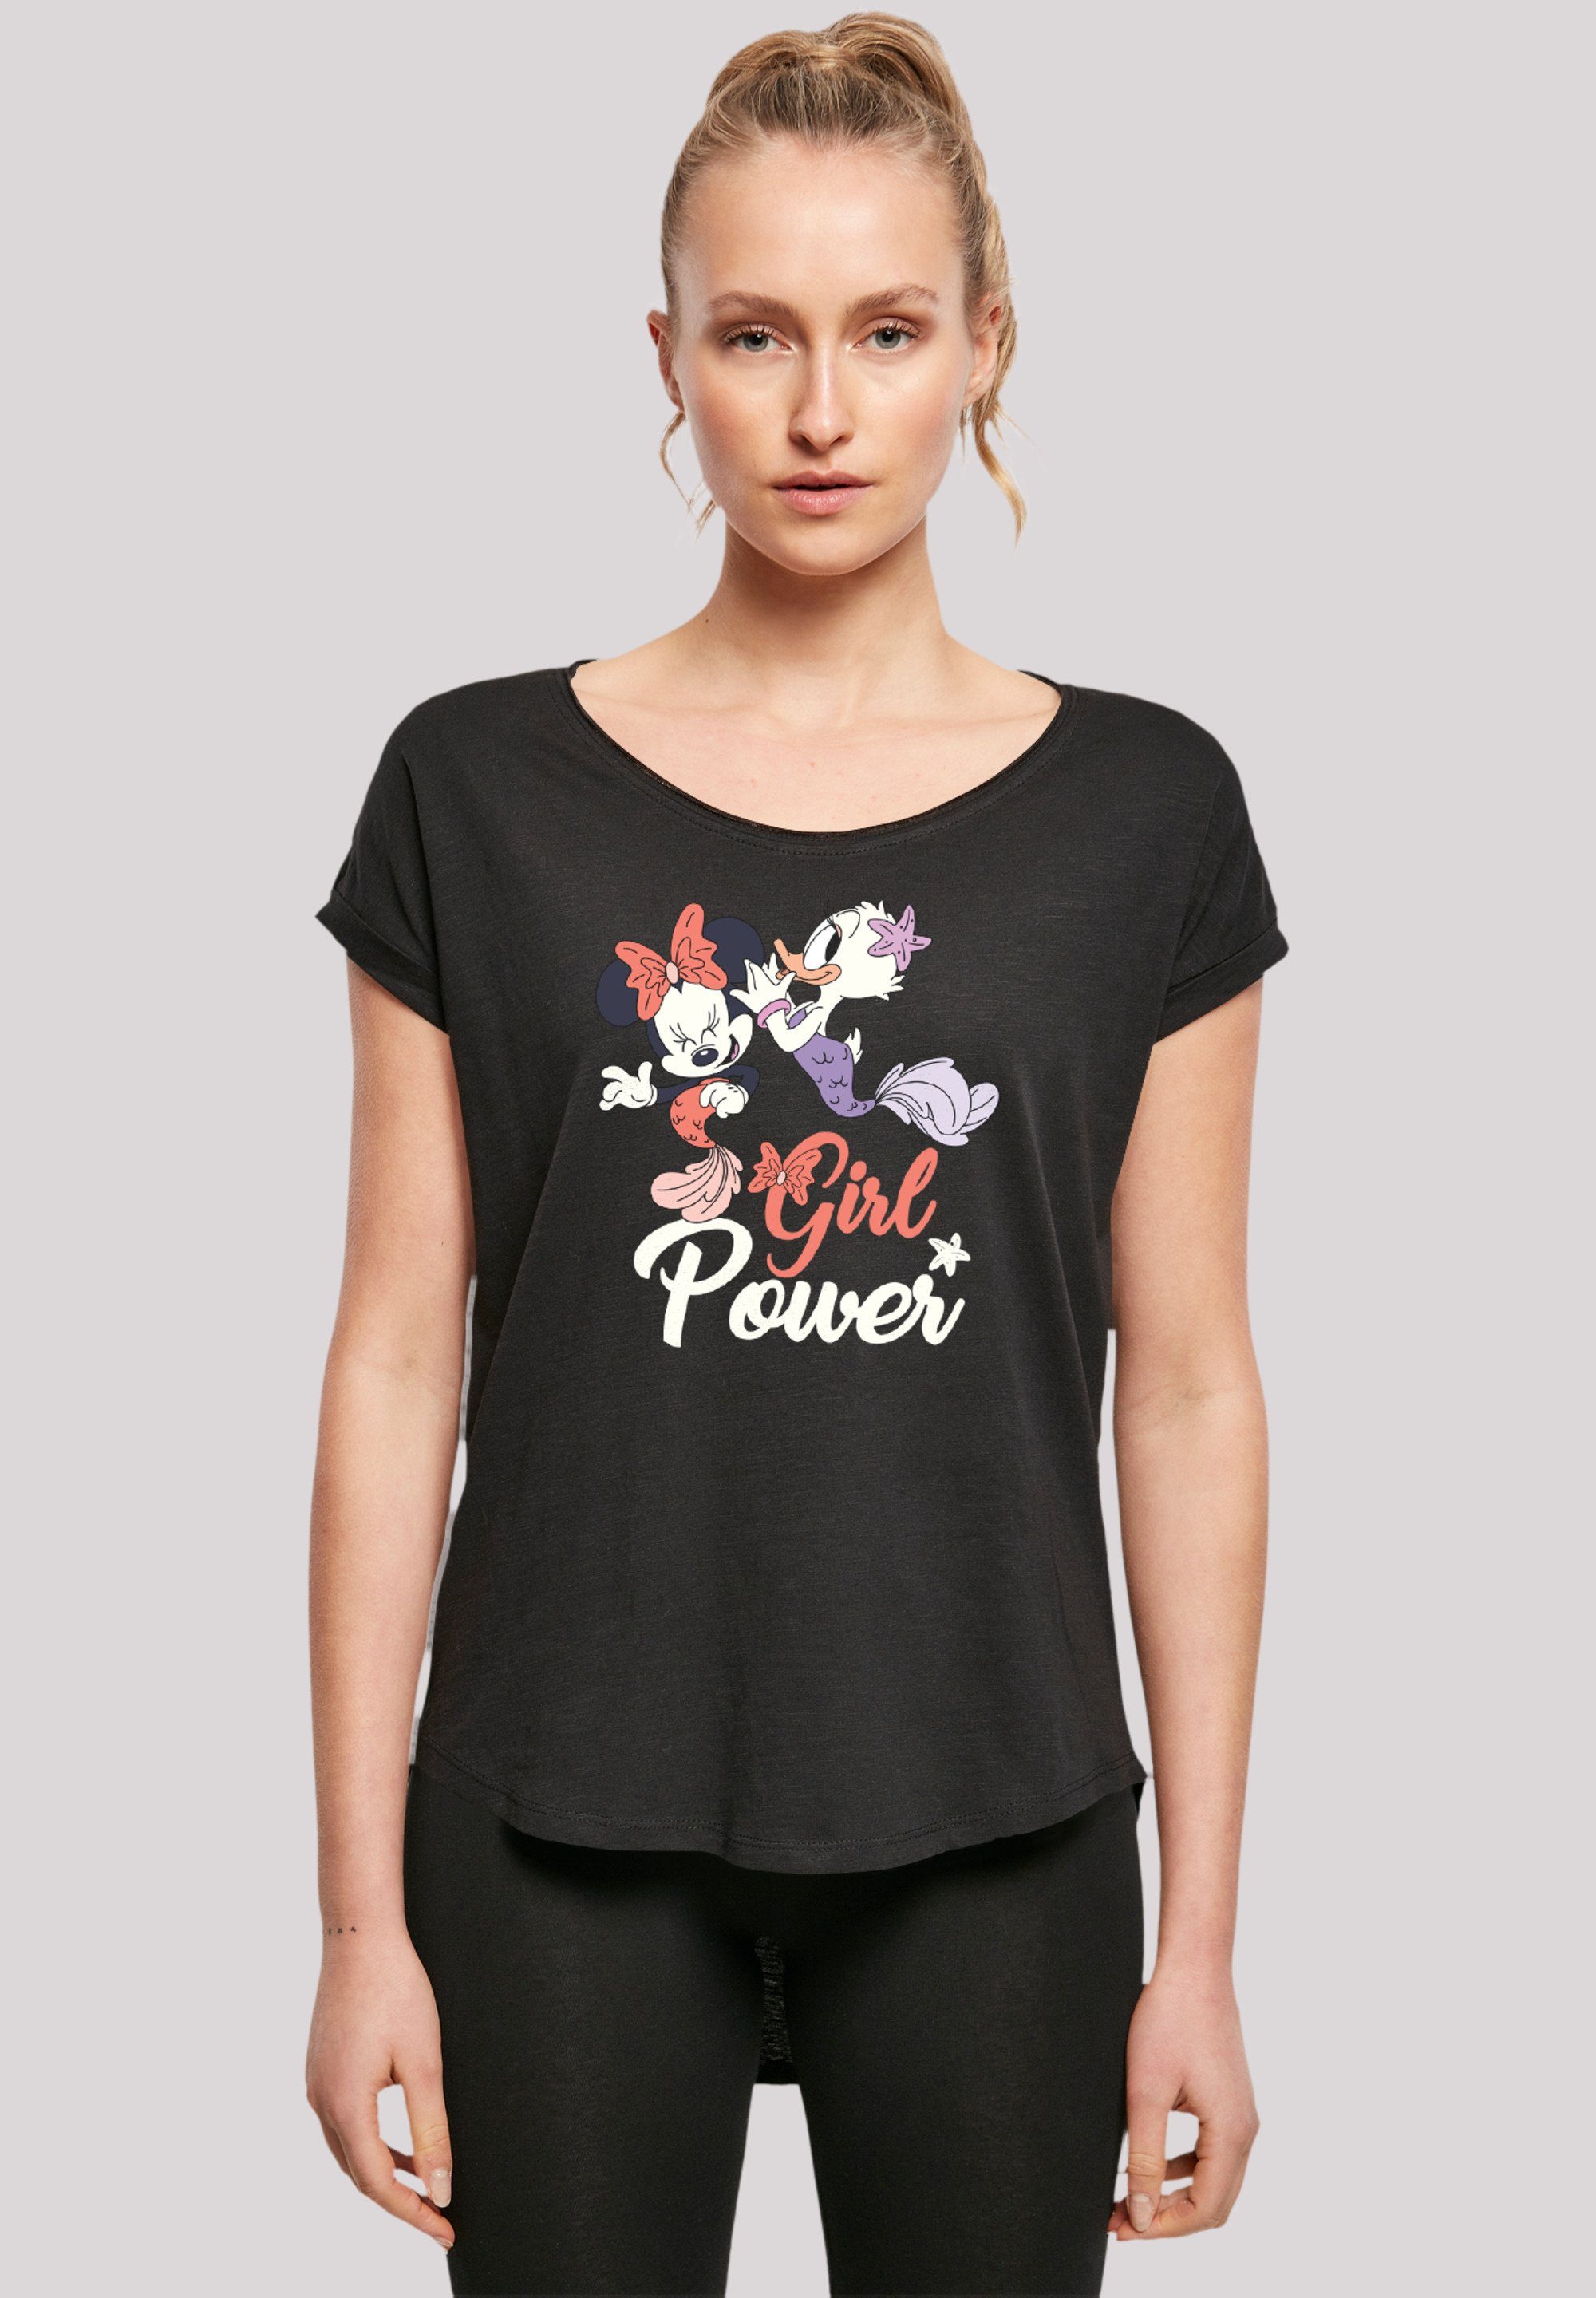 & Minnie Mouse T-Shirt Minnie Premium Disney Qualität Power Daisy F4NT4STIC